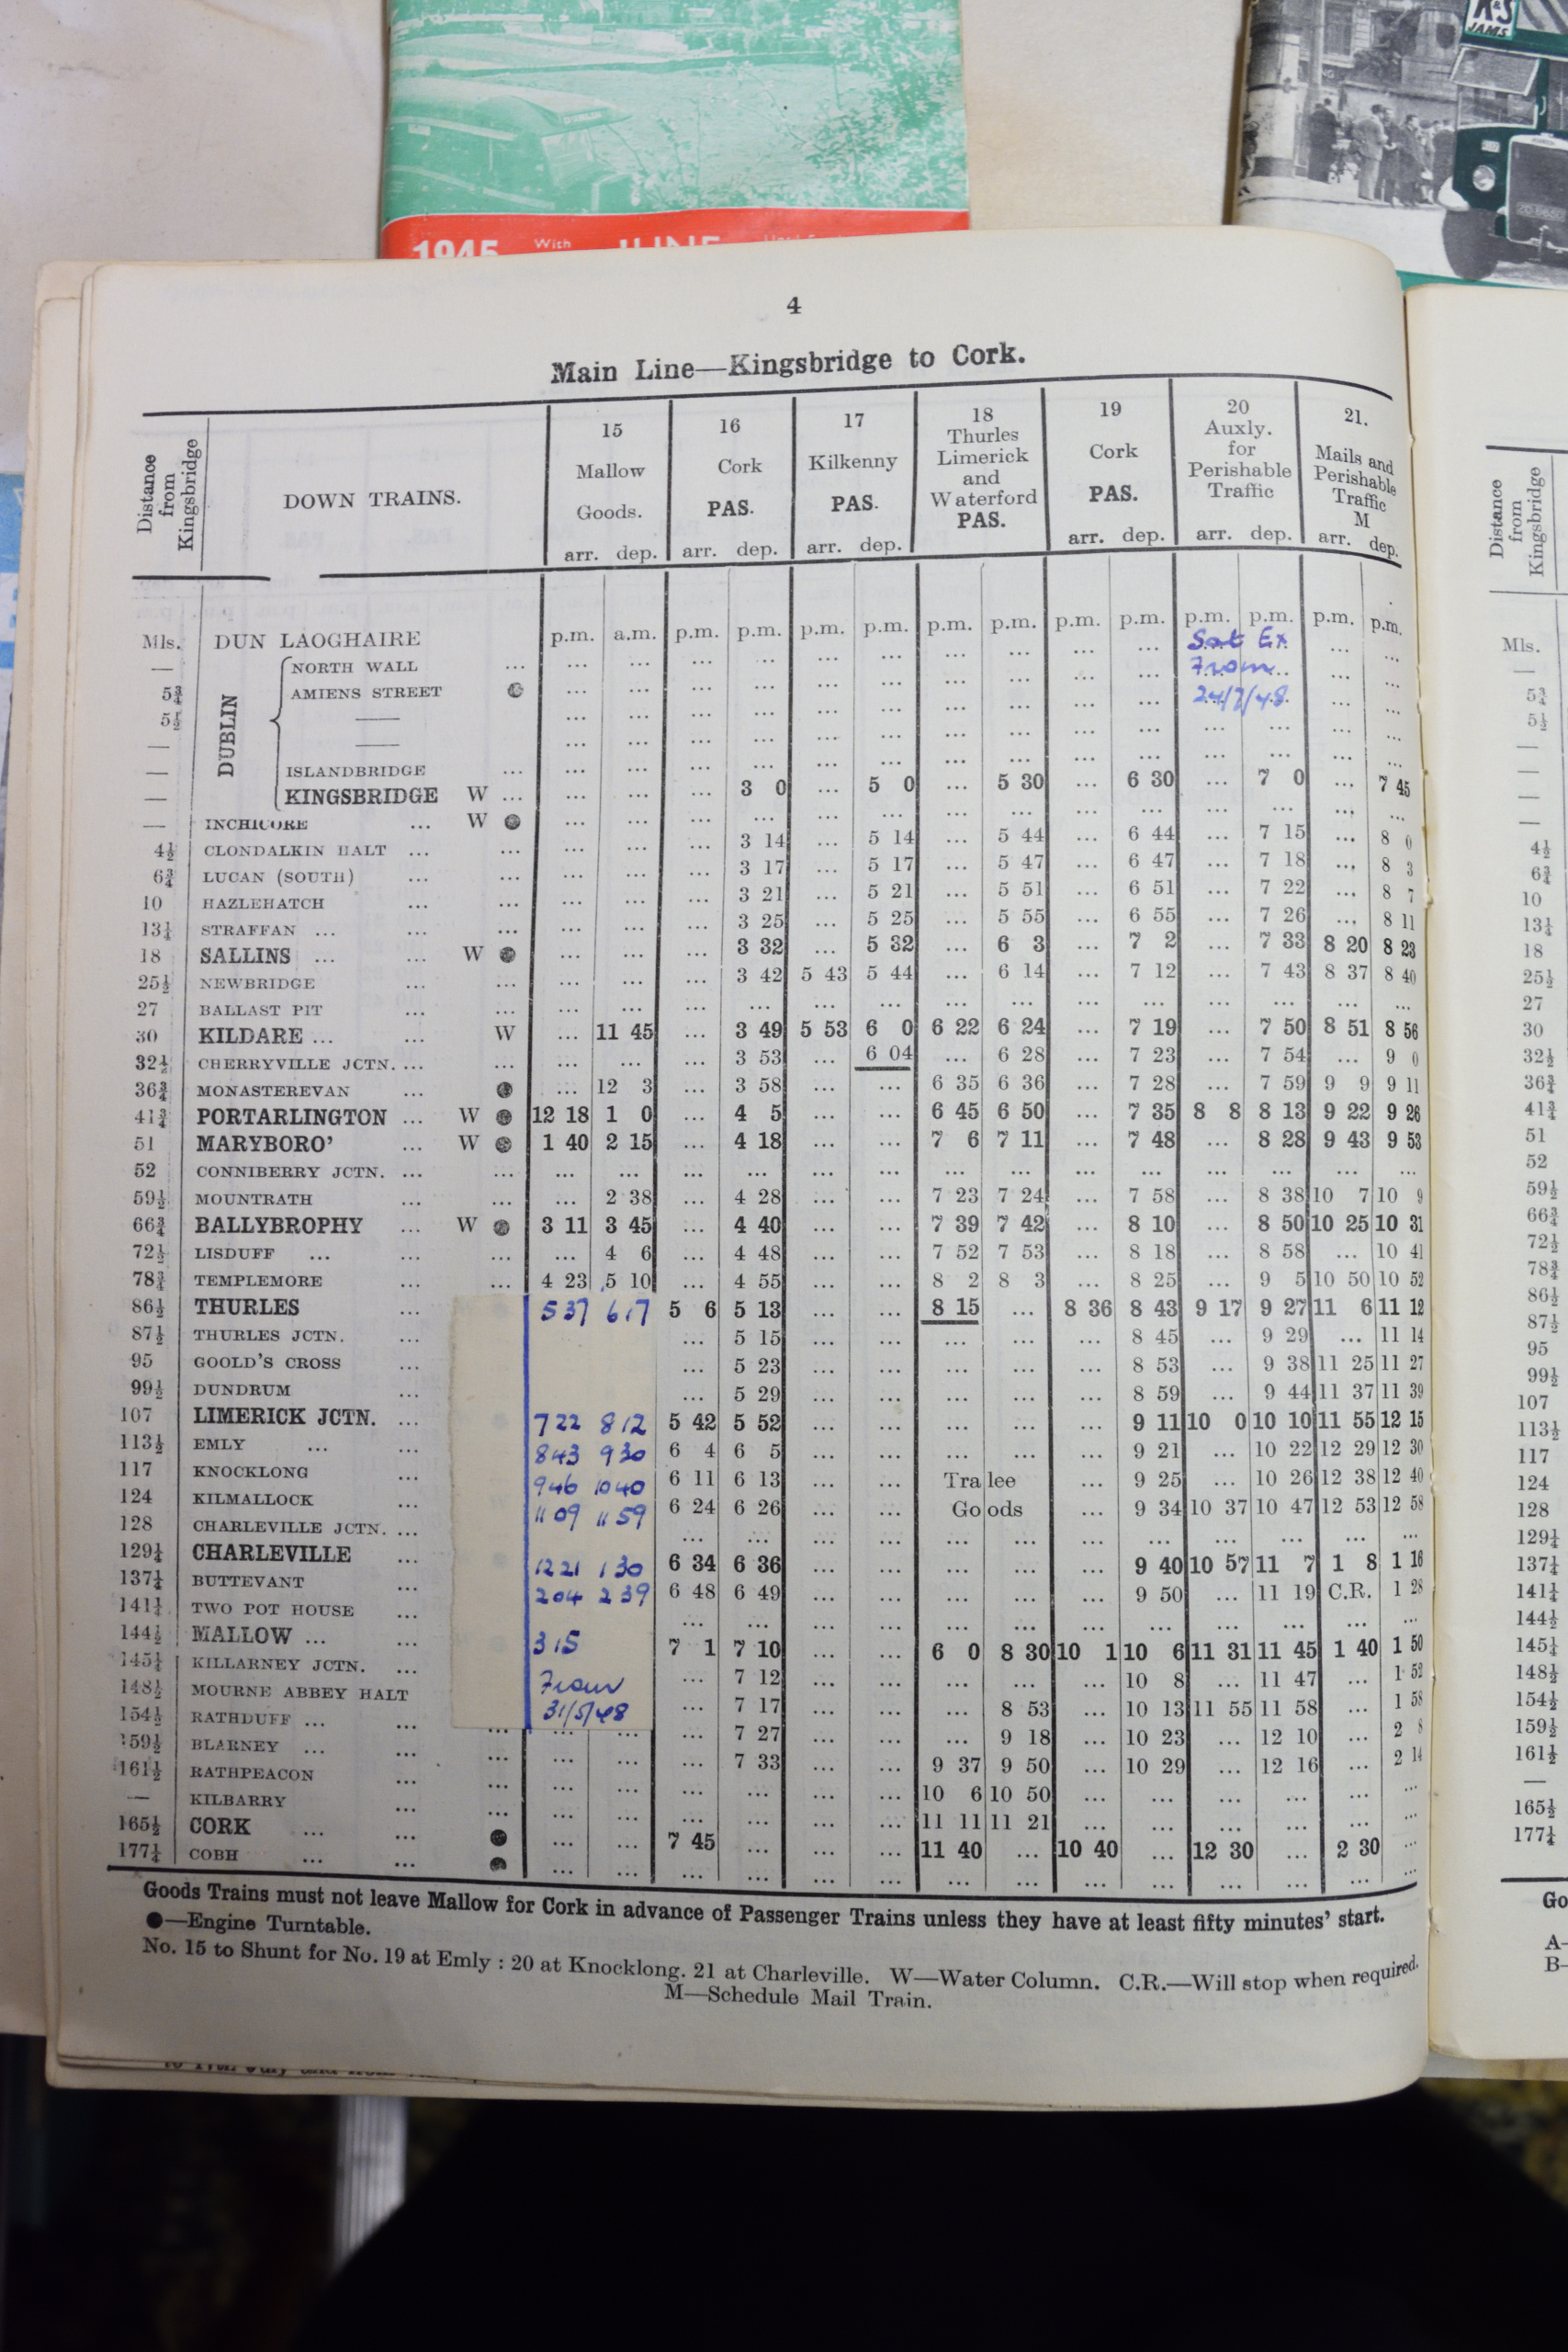 1945 Main line - Kingsbridge to Cork train timetable